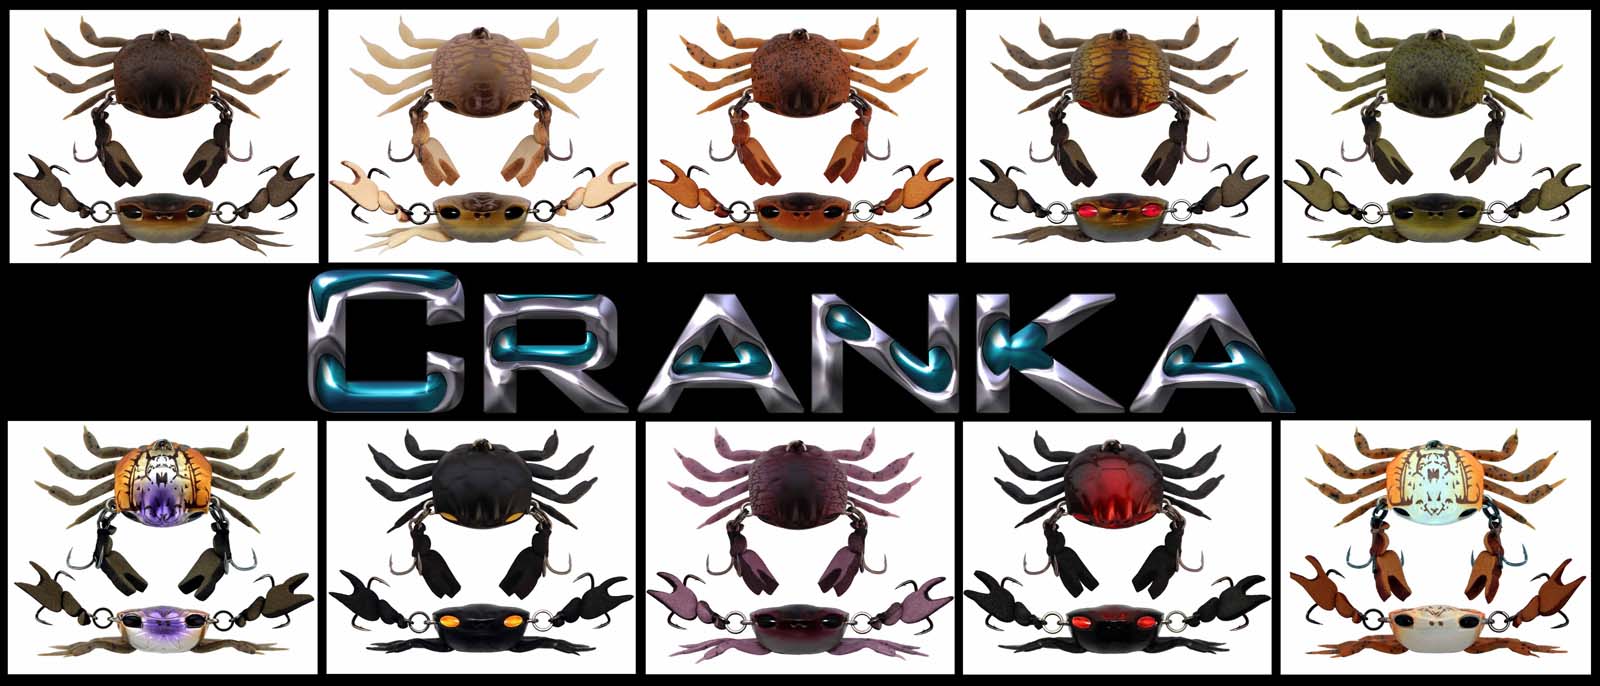 CRANKA Lures - Home of the Original CRANKA Crab Lure! - Overseas